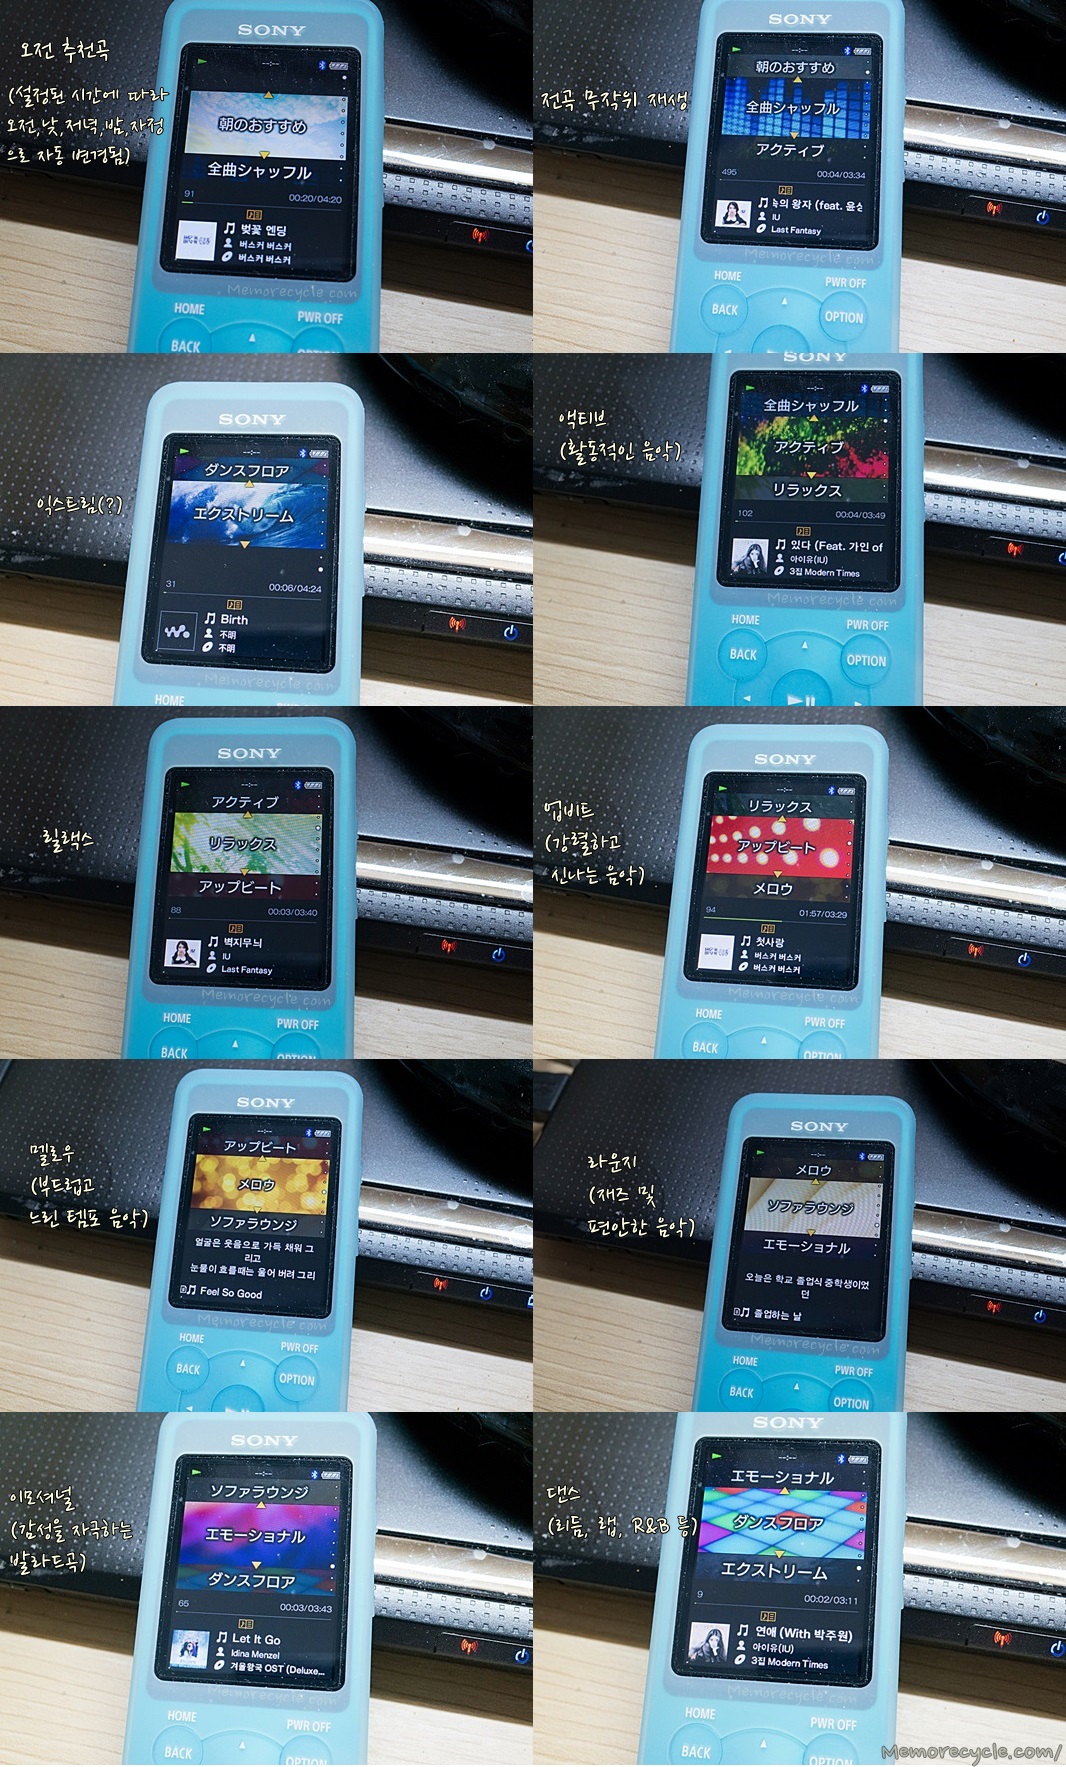 attachment:Nexus 5:SonySenseMe_NW-S786.jpg